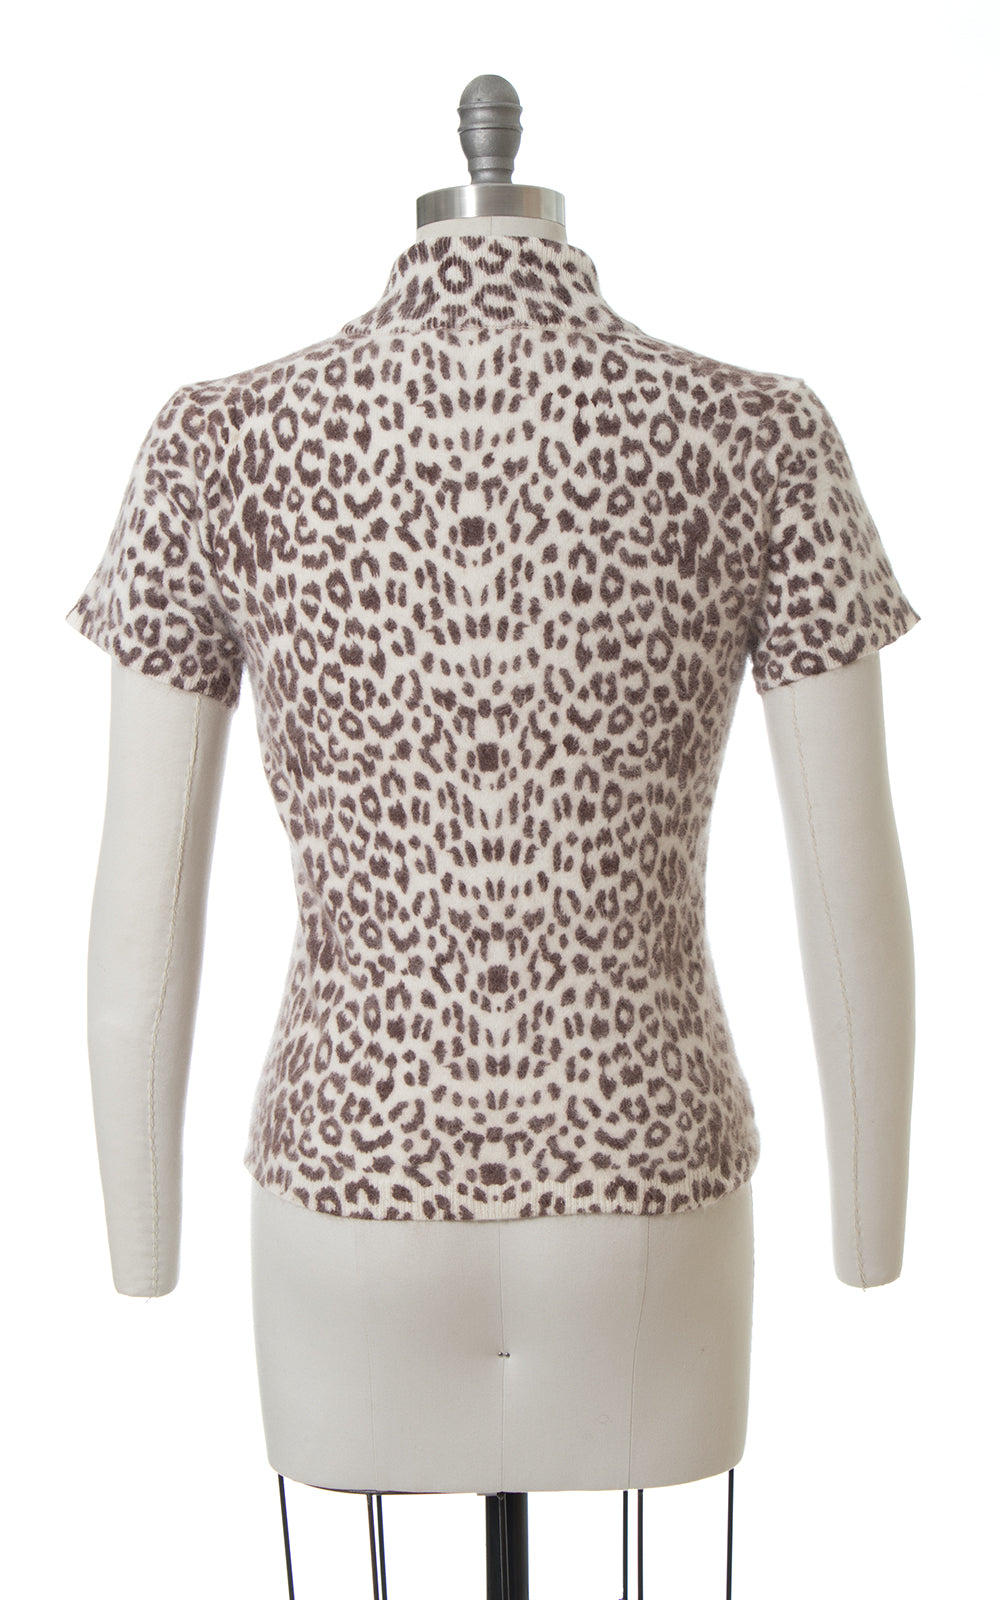 1990s Leopard Print Angora Knit Sweater Top